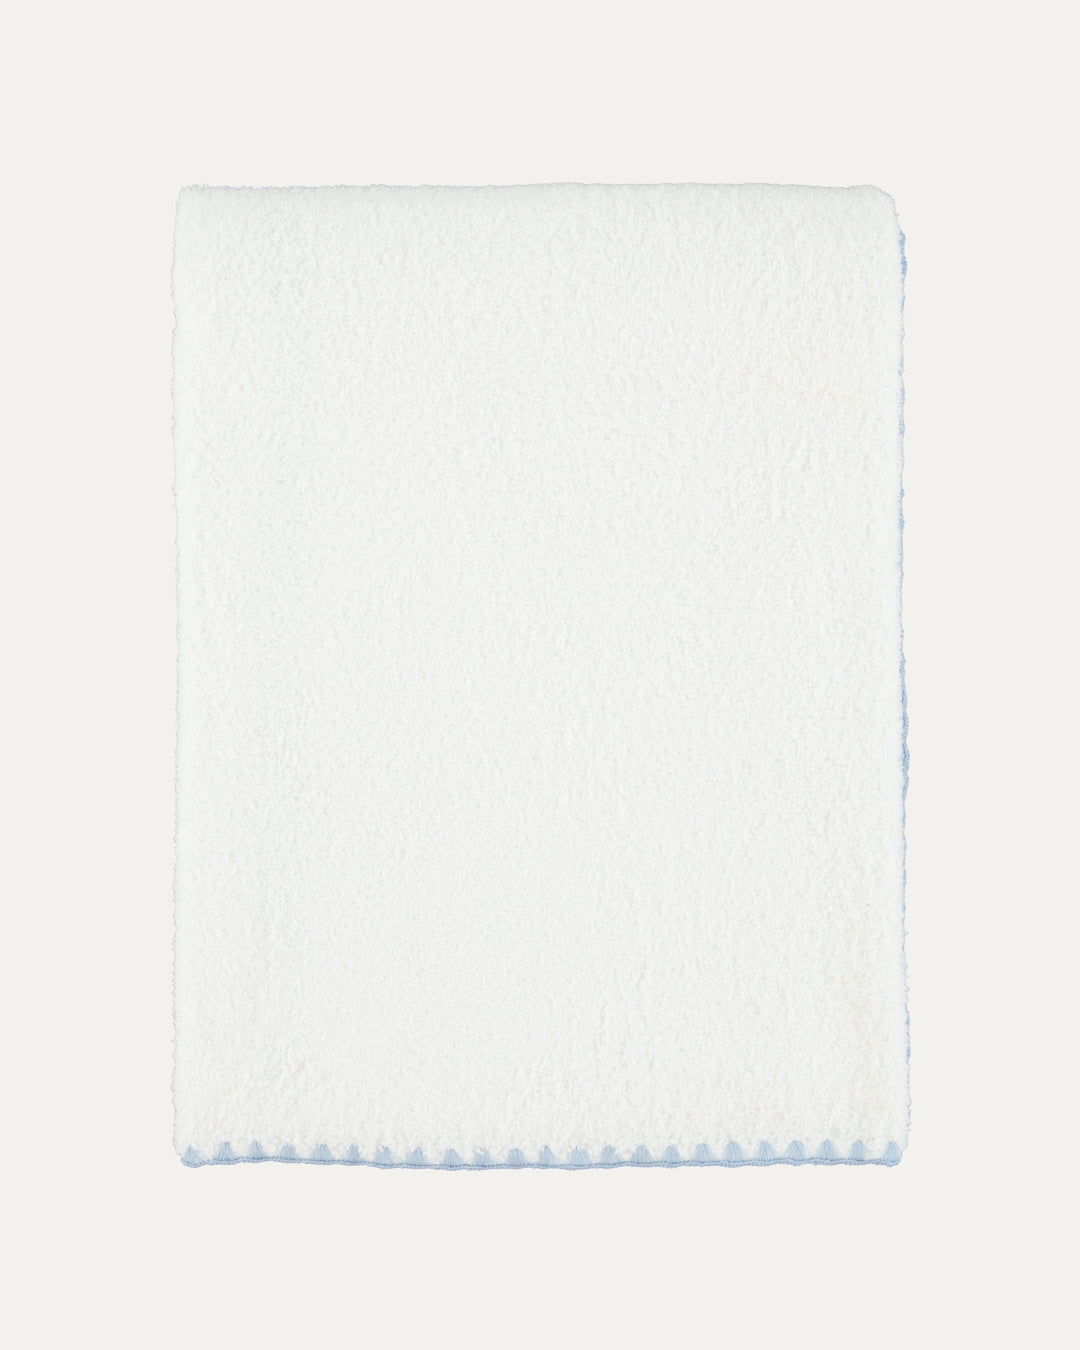 Concha Bath Towel, White with Blue